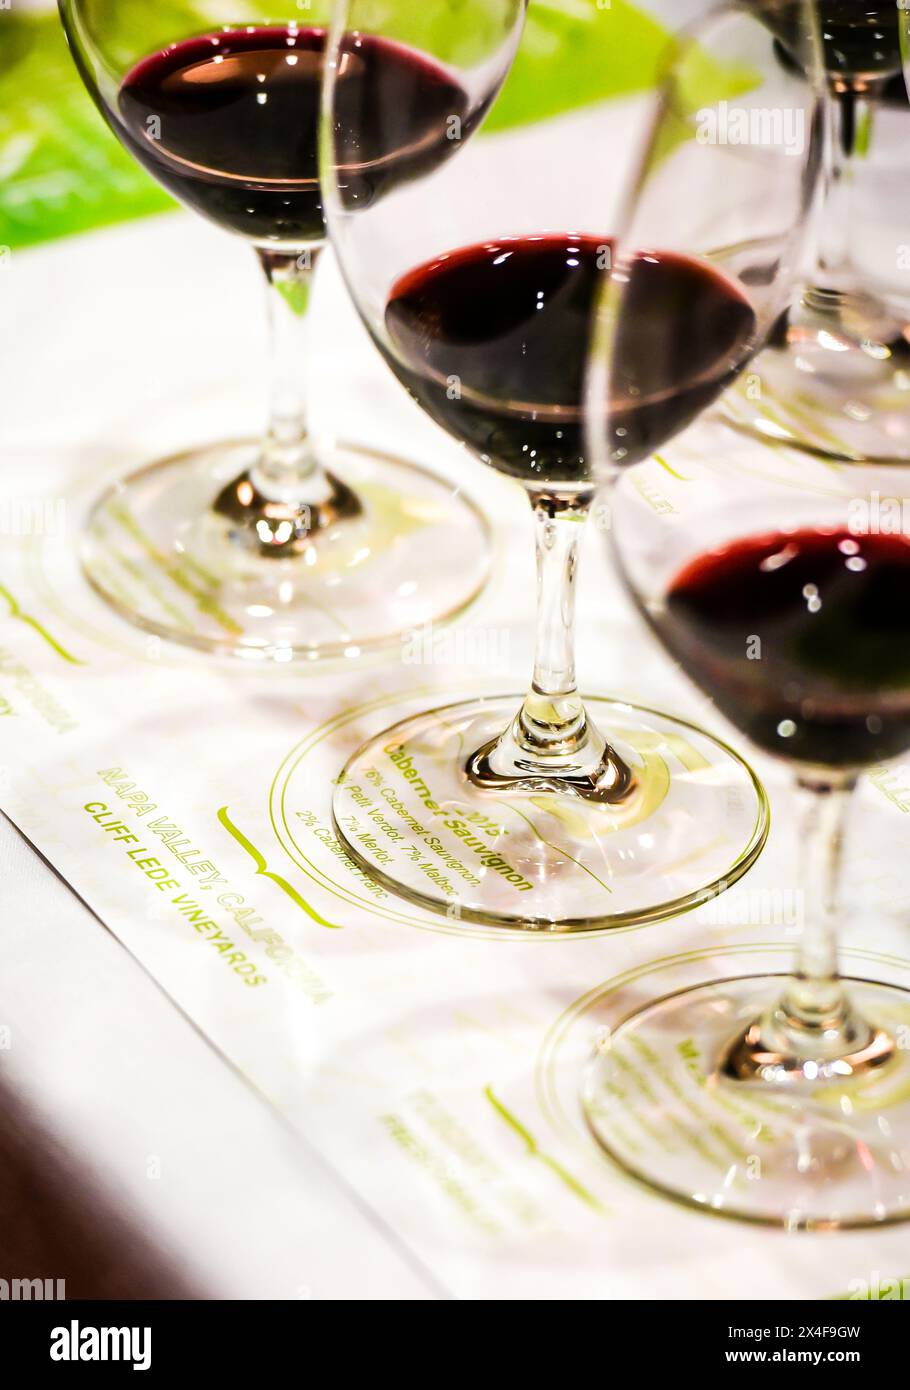 USA, Washington State, Walla Walla. A flight of Cabernet Sauvignon red wine at a wine tasting event in Walla Walla. (Editorial Use Only) Stock Photo